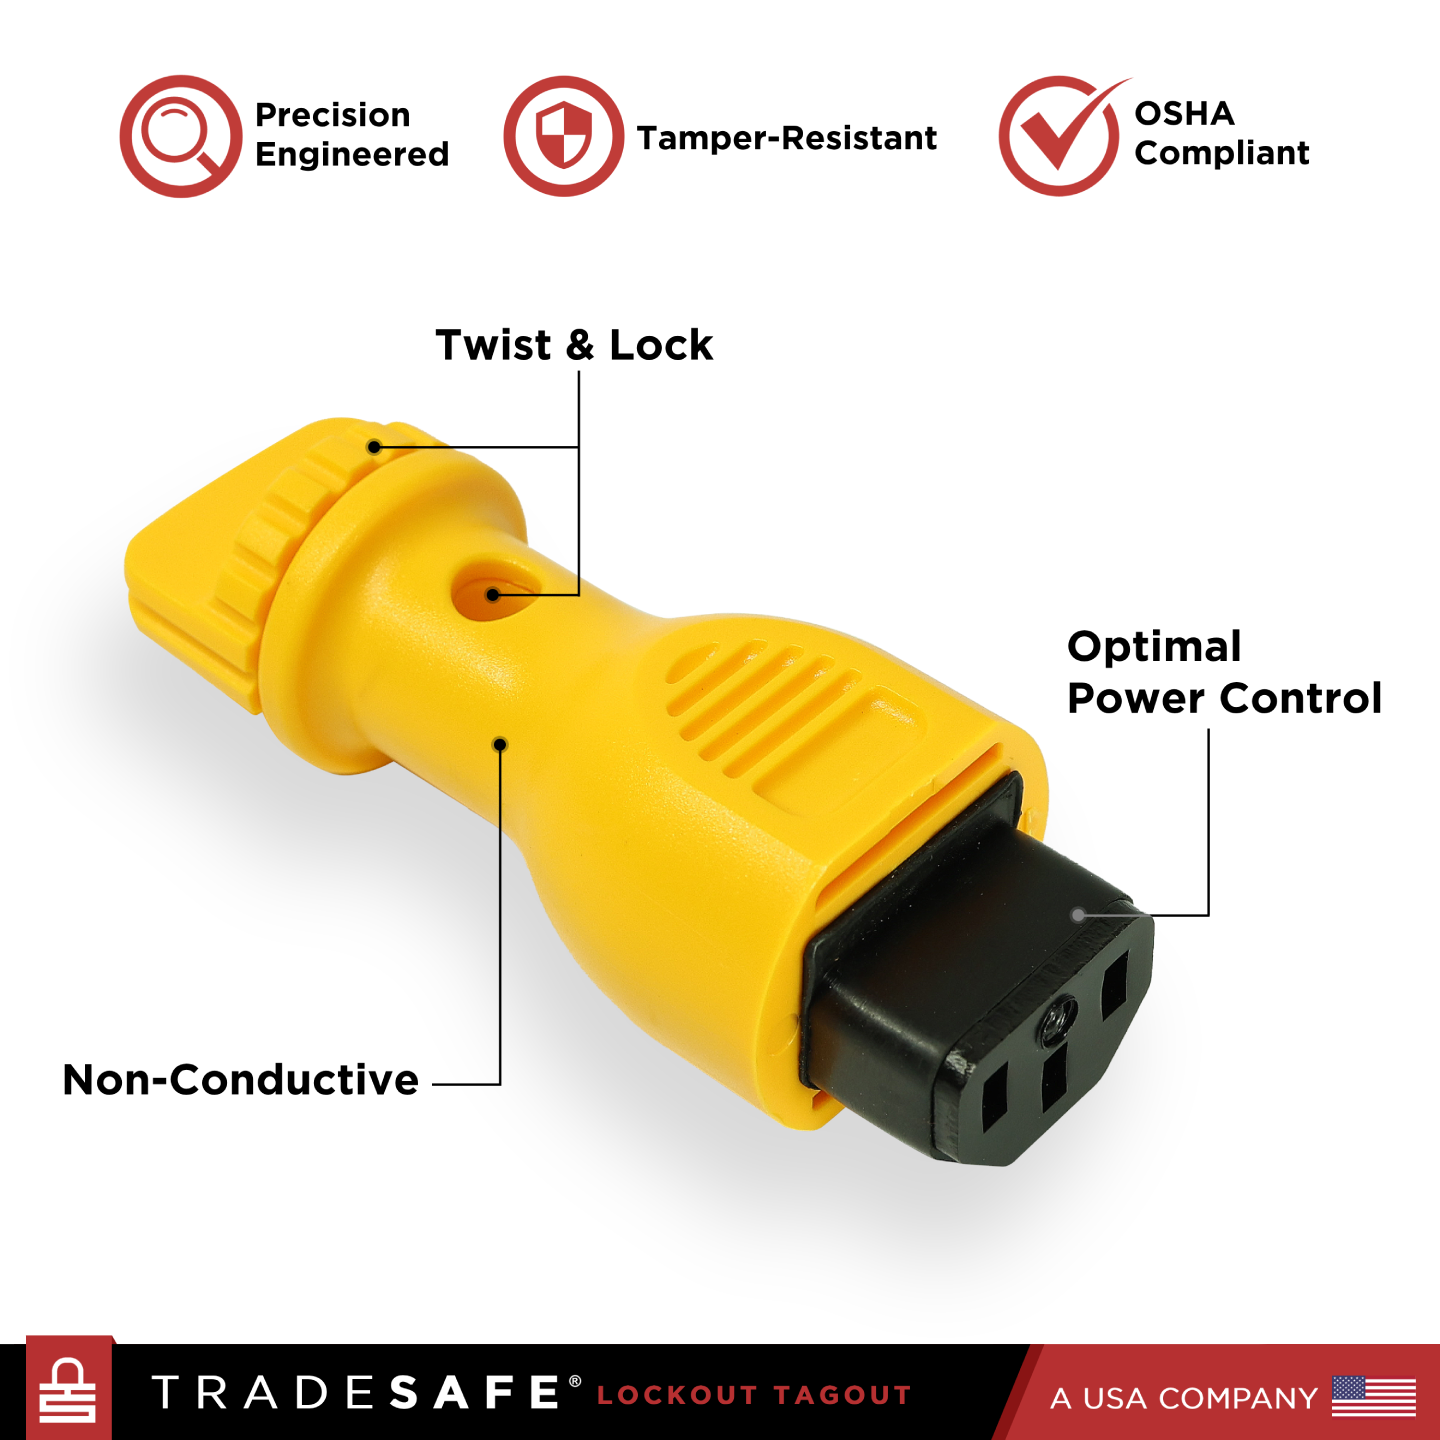 infographic: power plug lock - twist & lock, non-conductive, optimal power control